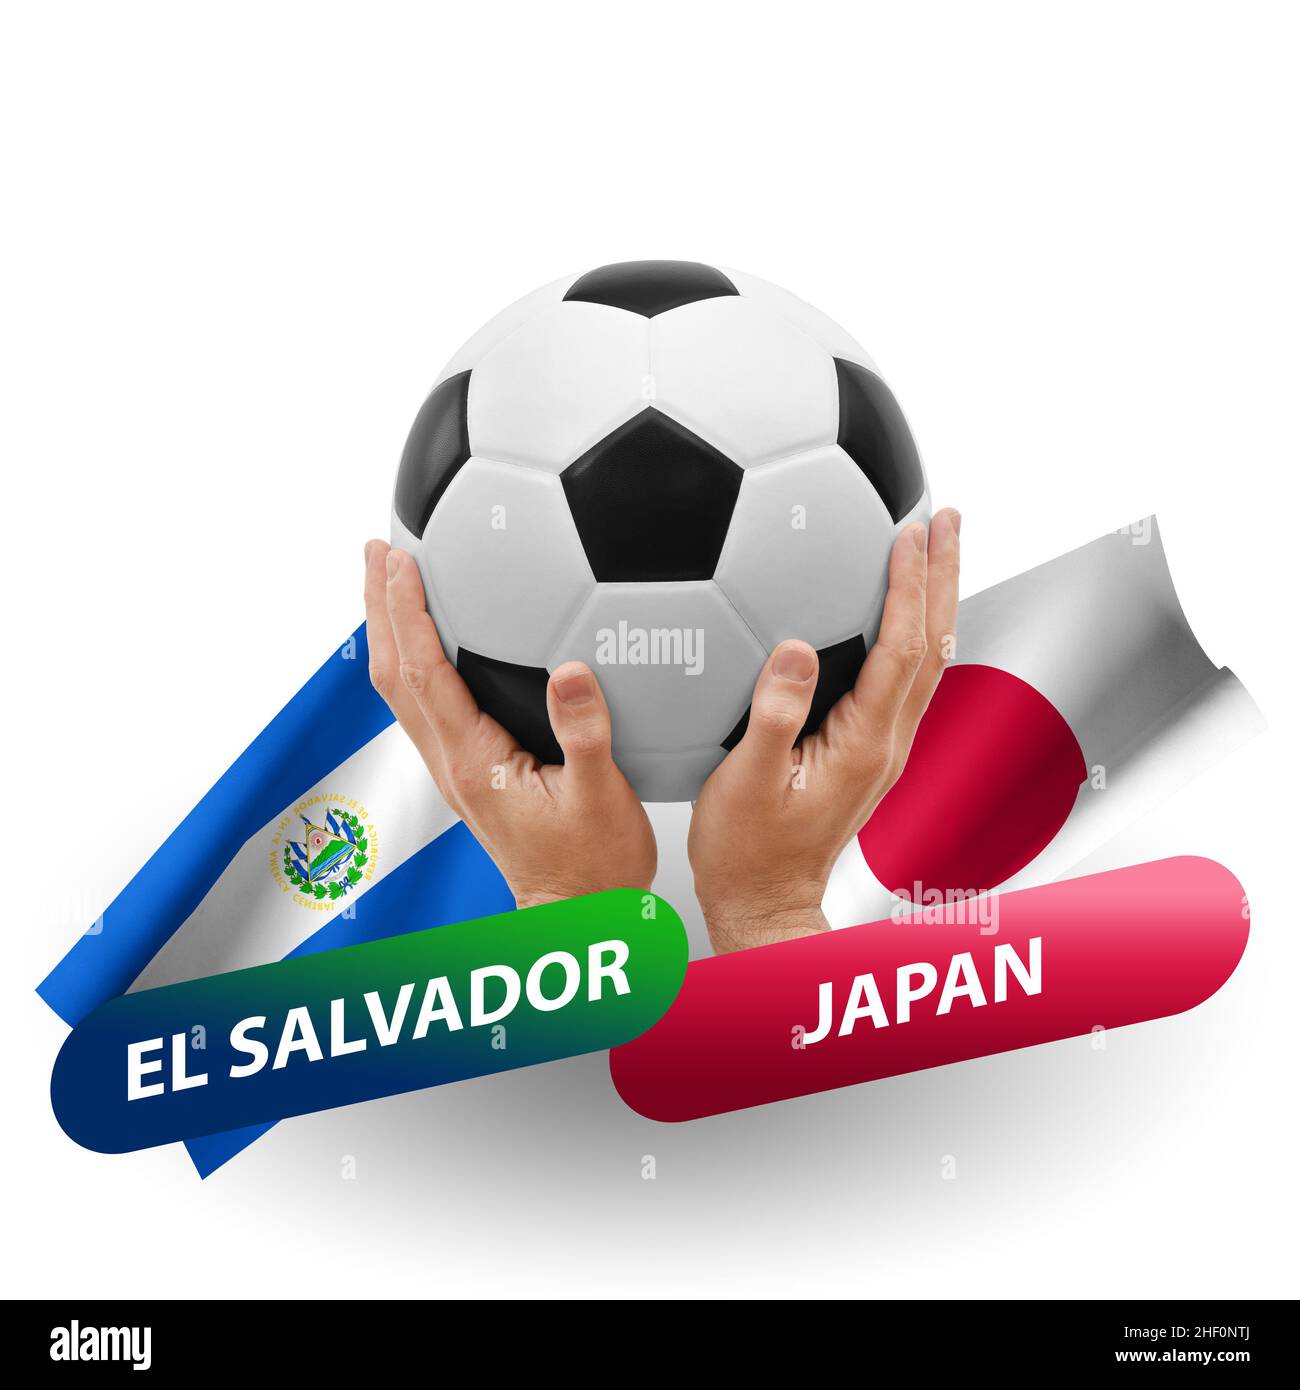 Soccer football competition match, national teams el salvador vs japan